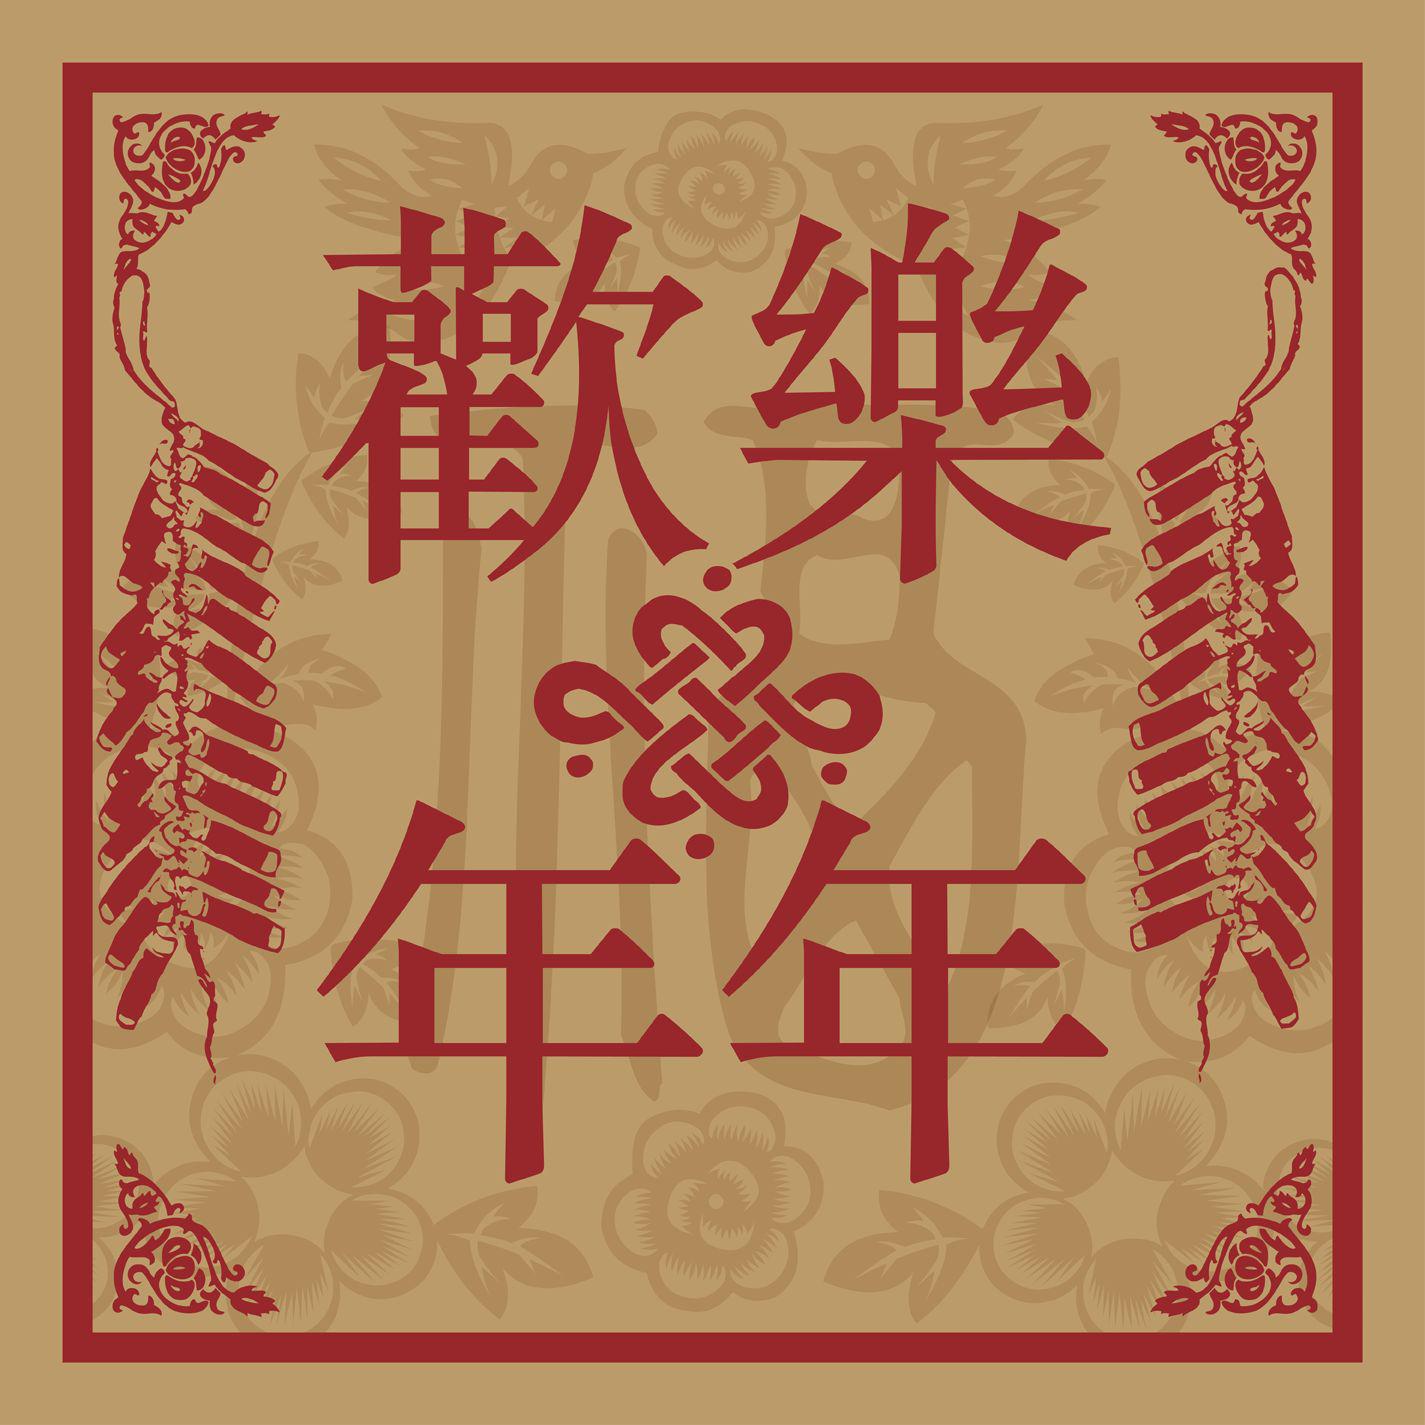 欢乐年年歌词 歌手叶蒨文 / 杜德伟-专辑Warner Chinese New Year Compilation - A Better Year-单曲《欢乐年年》LRC歌词下载